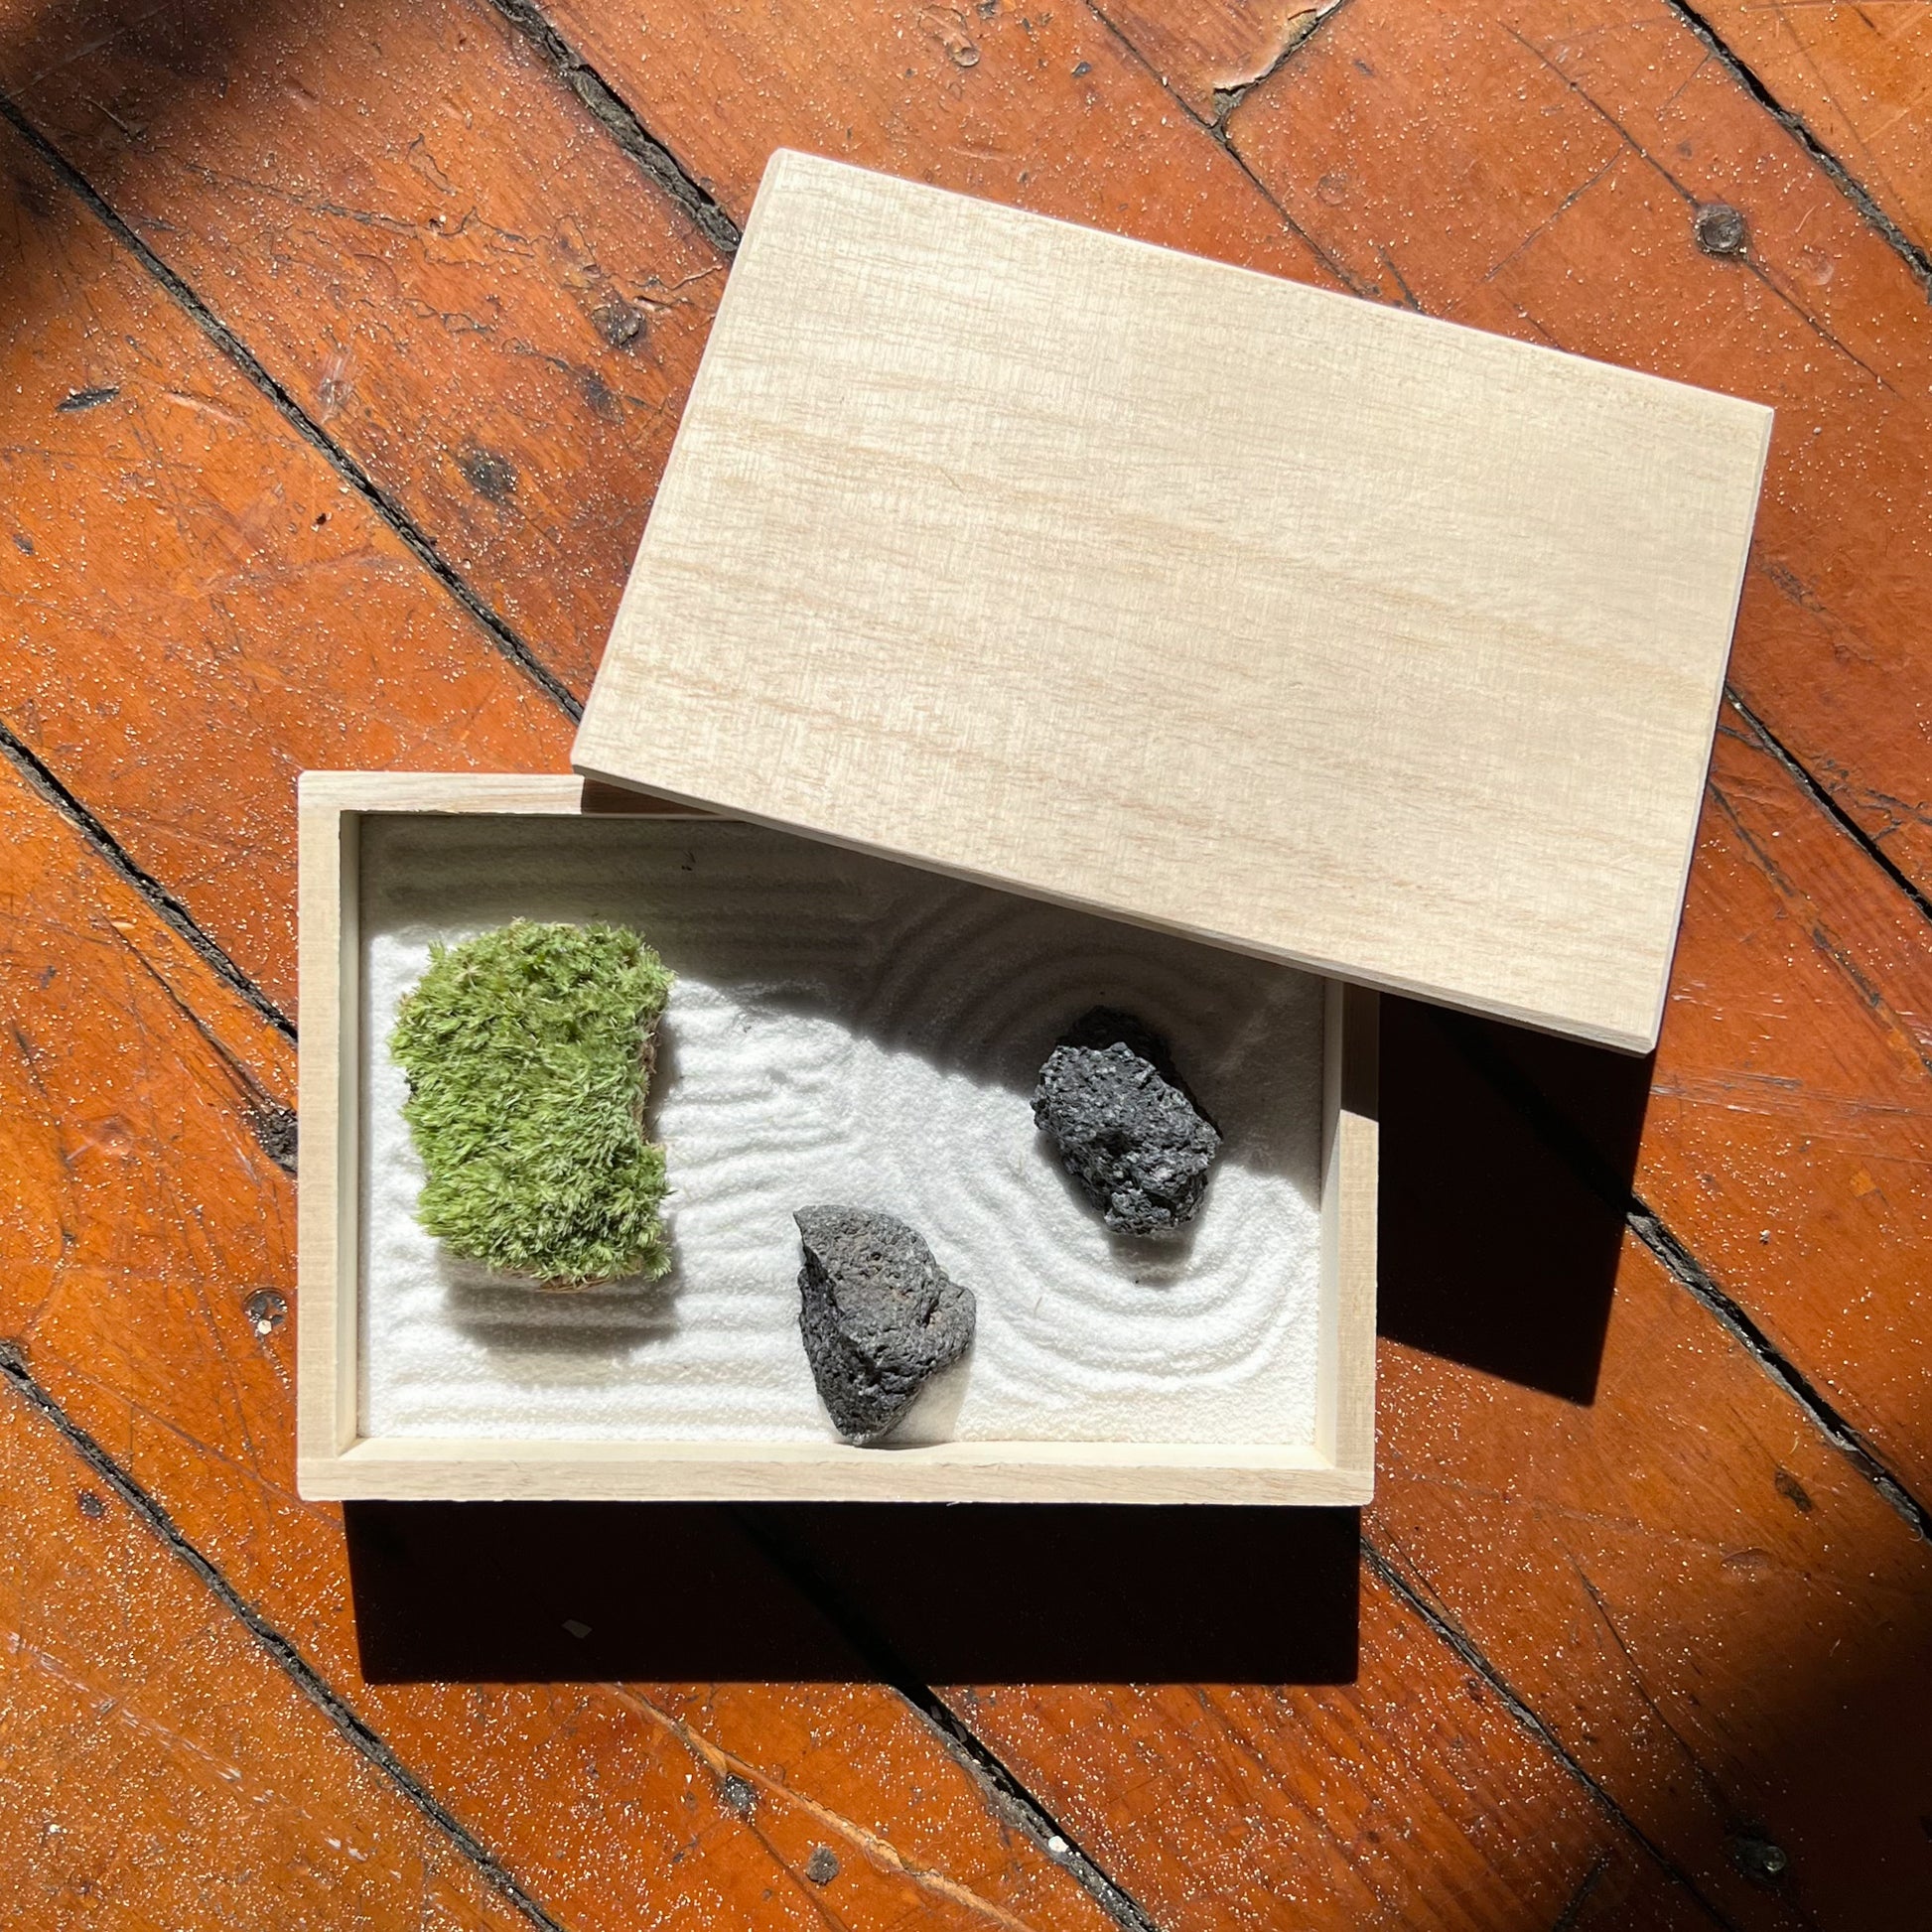 Miniature Zen Garden Kits_Lifestyle_Home_Japanese Style